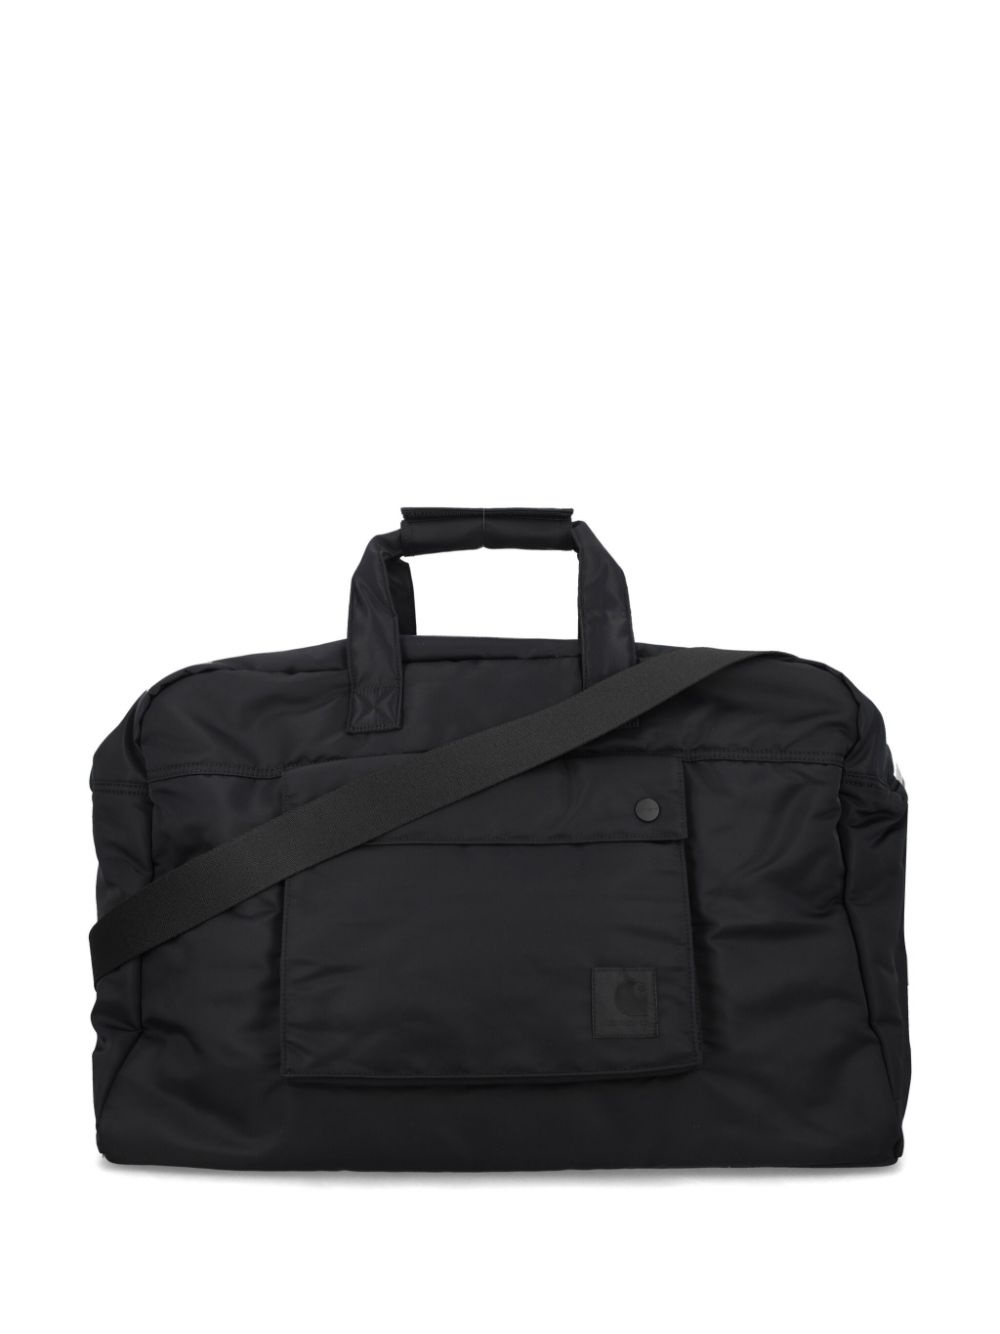 Otley two-way travel bag - 1